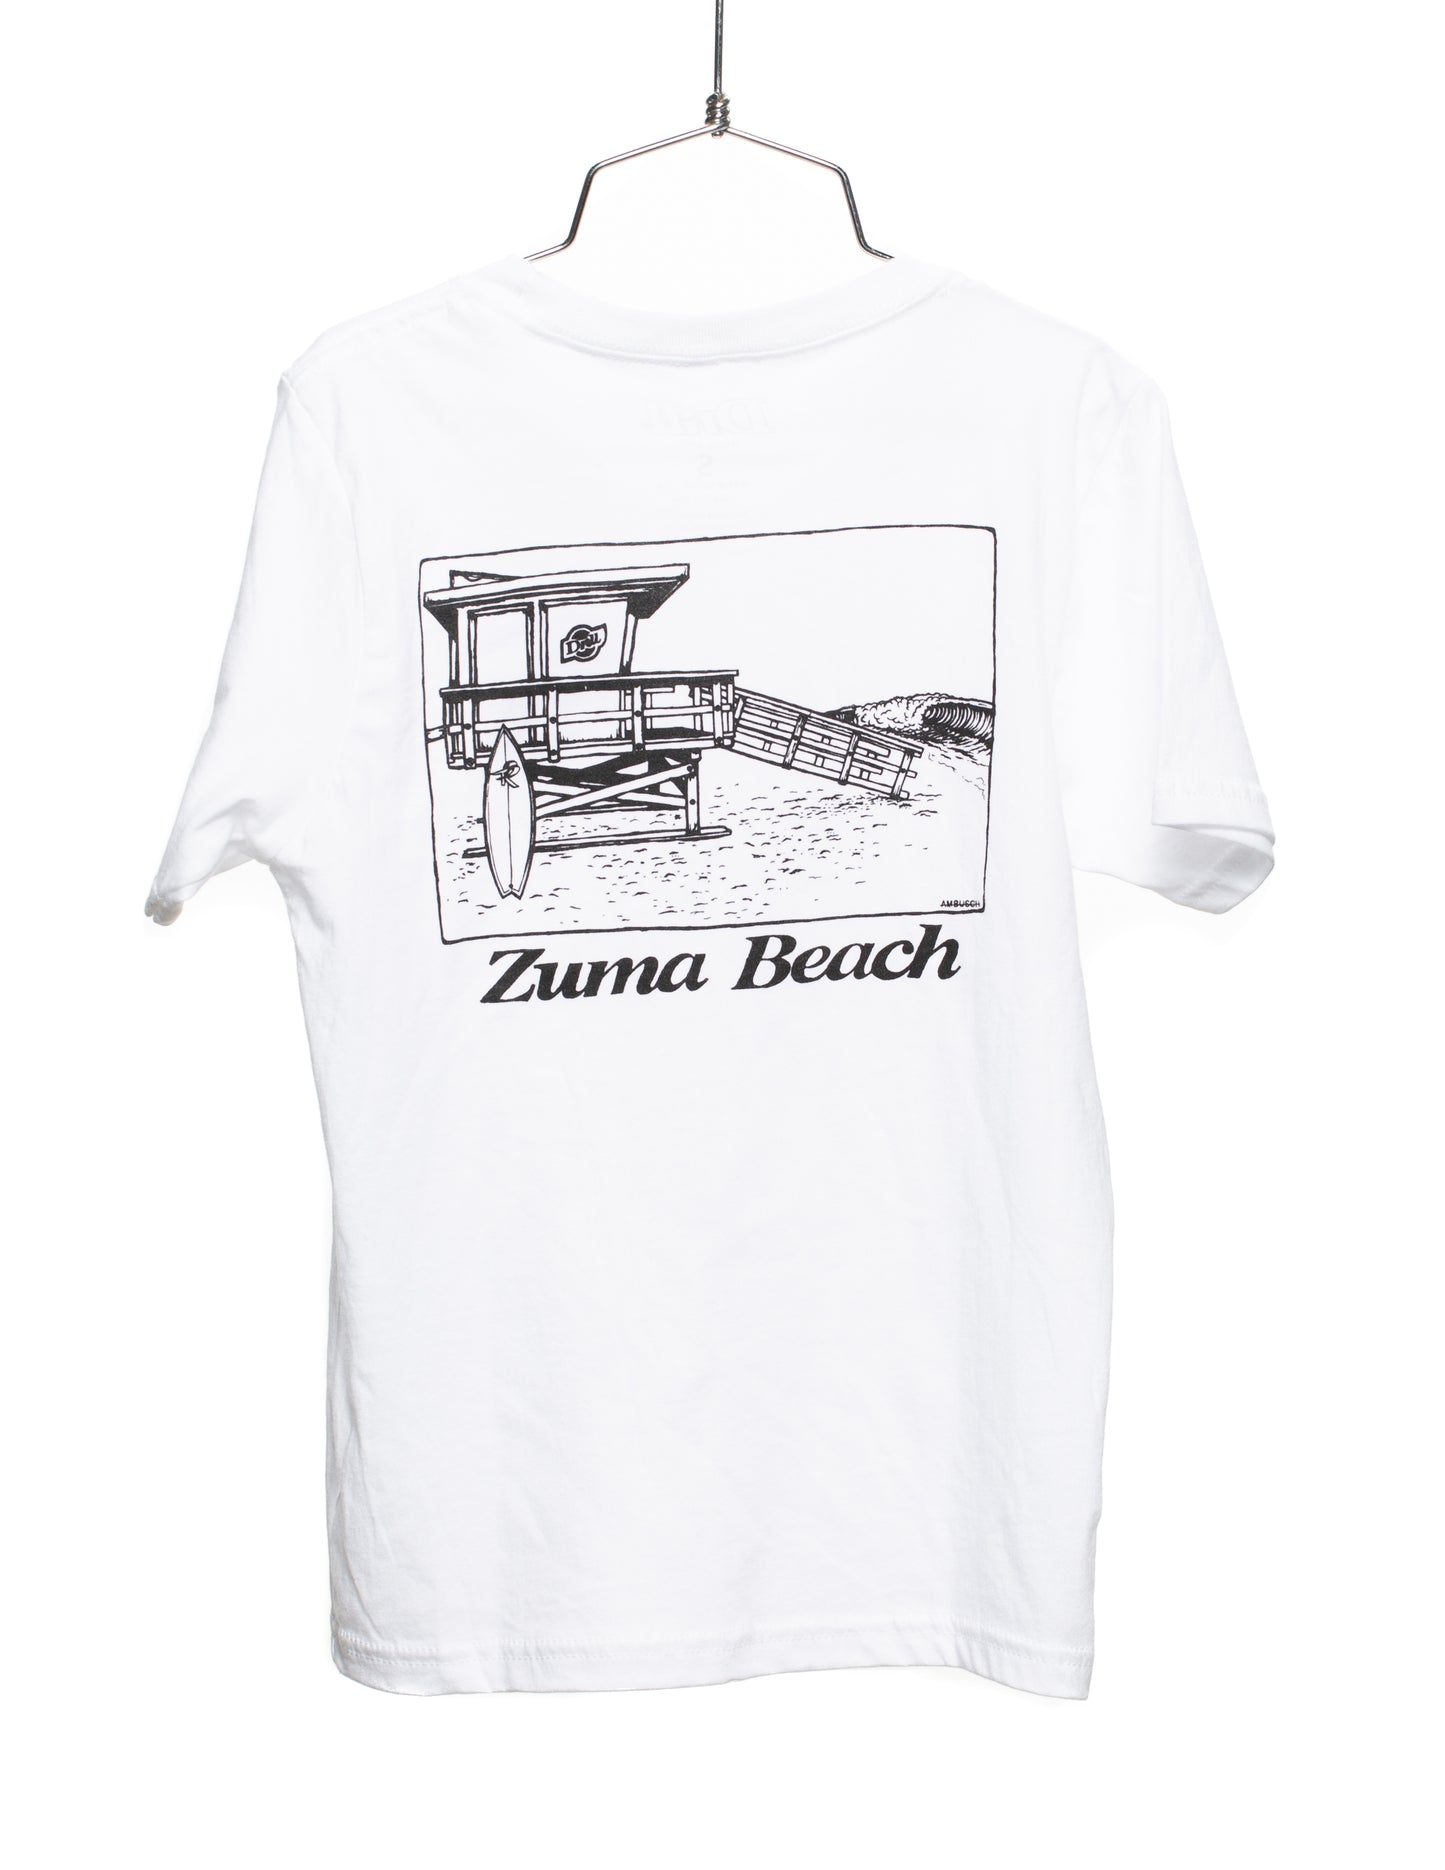 Zuma Beach Youth Tee